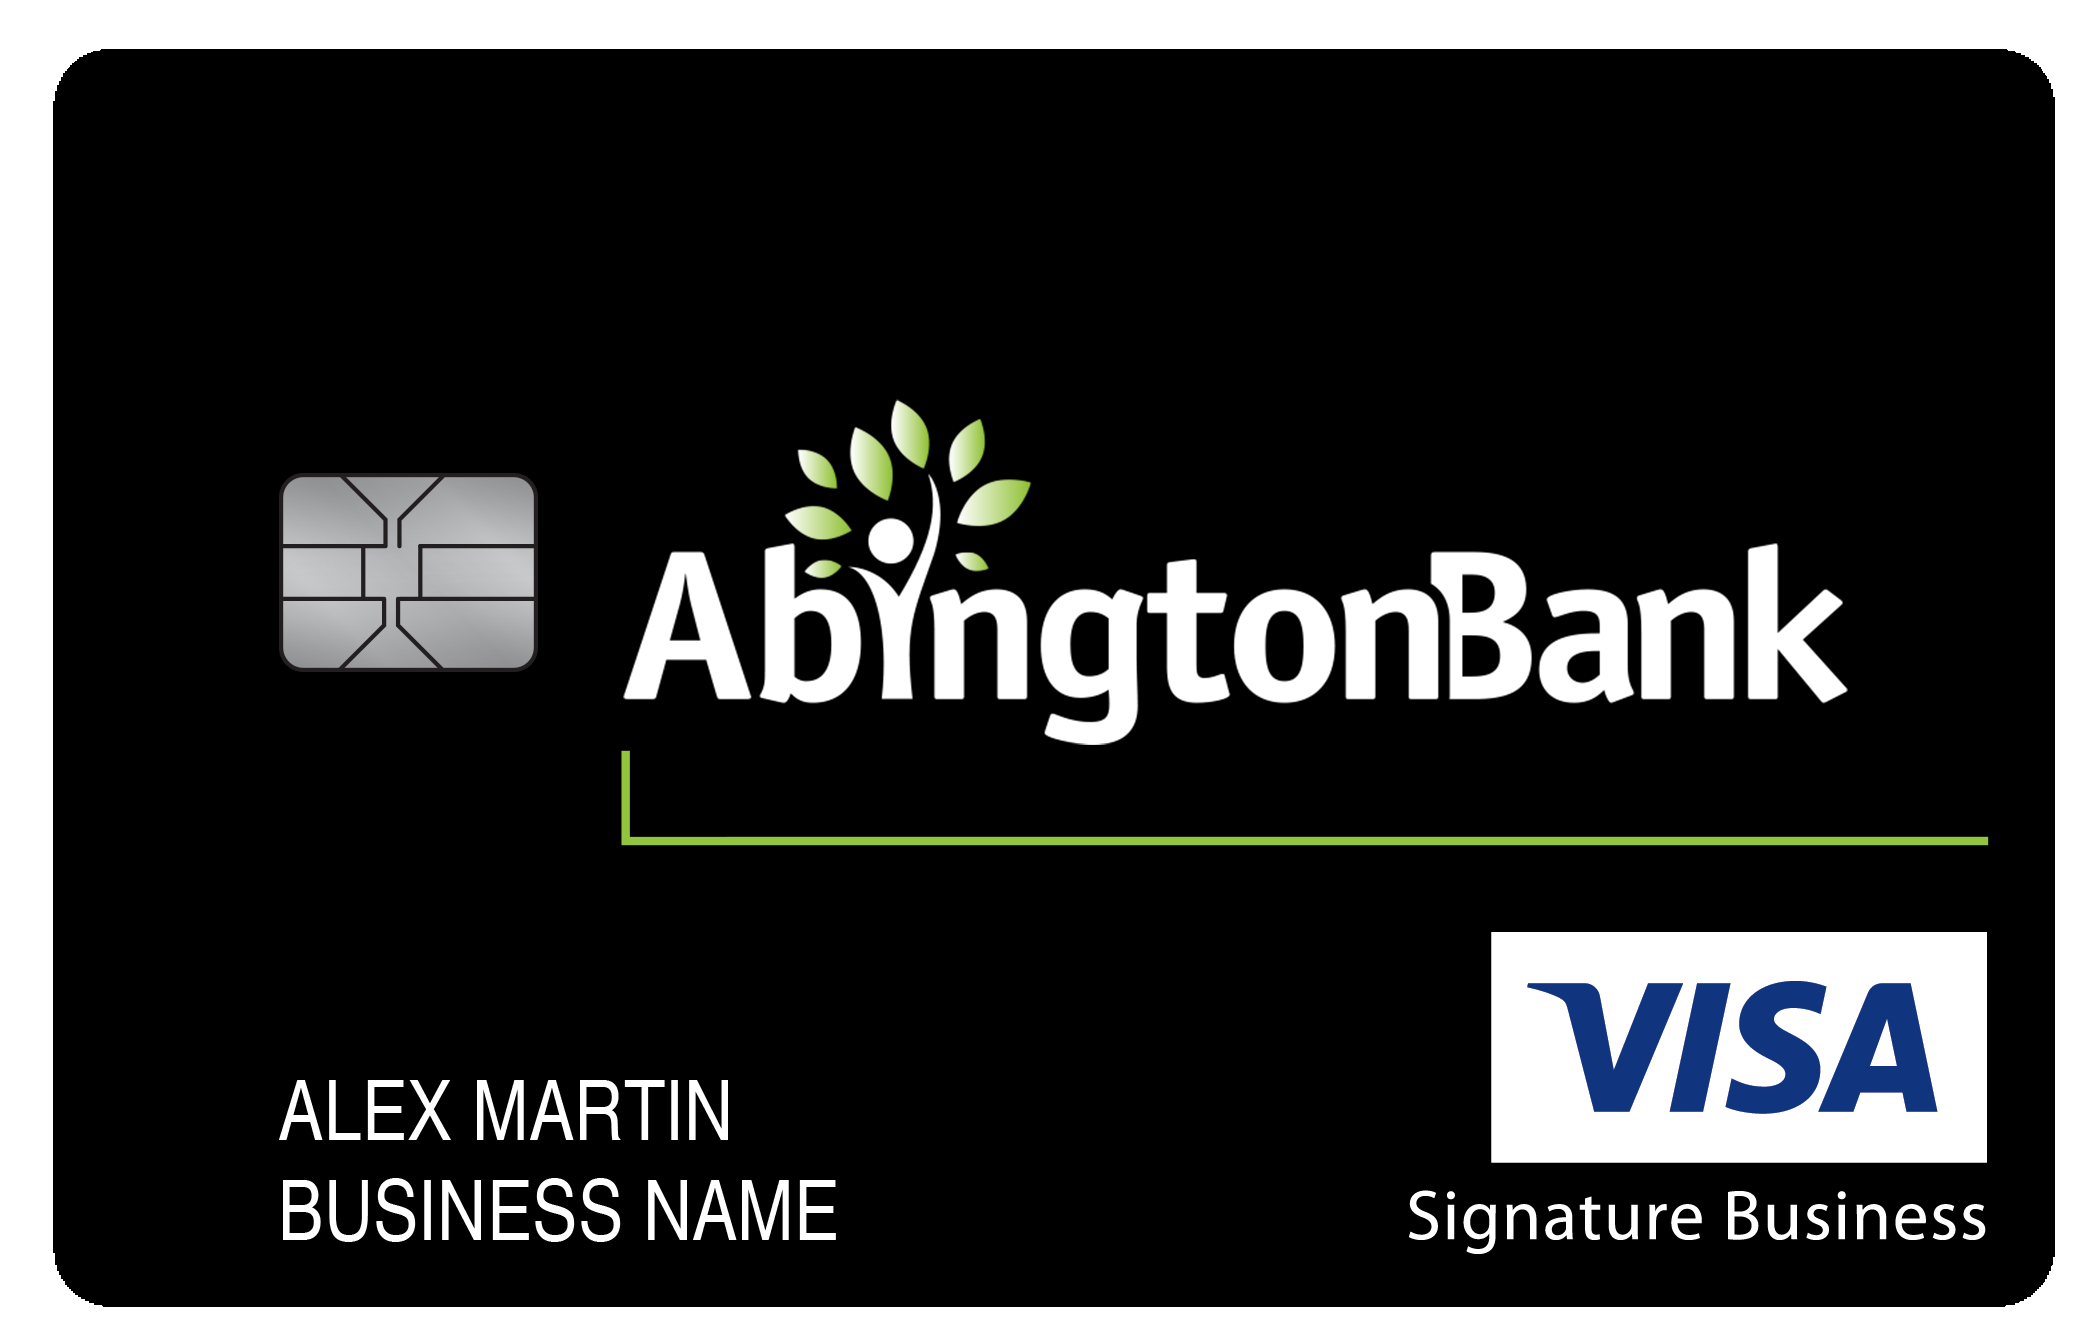 Abington Bank Smart Business Rewards Card